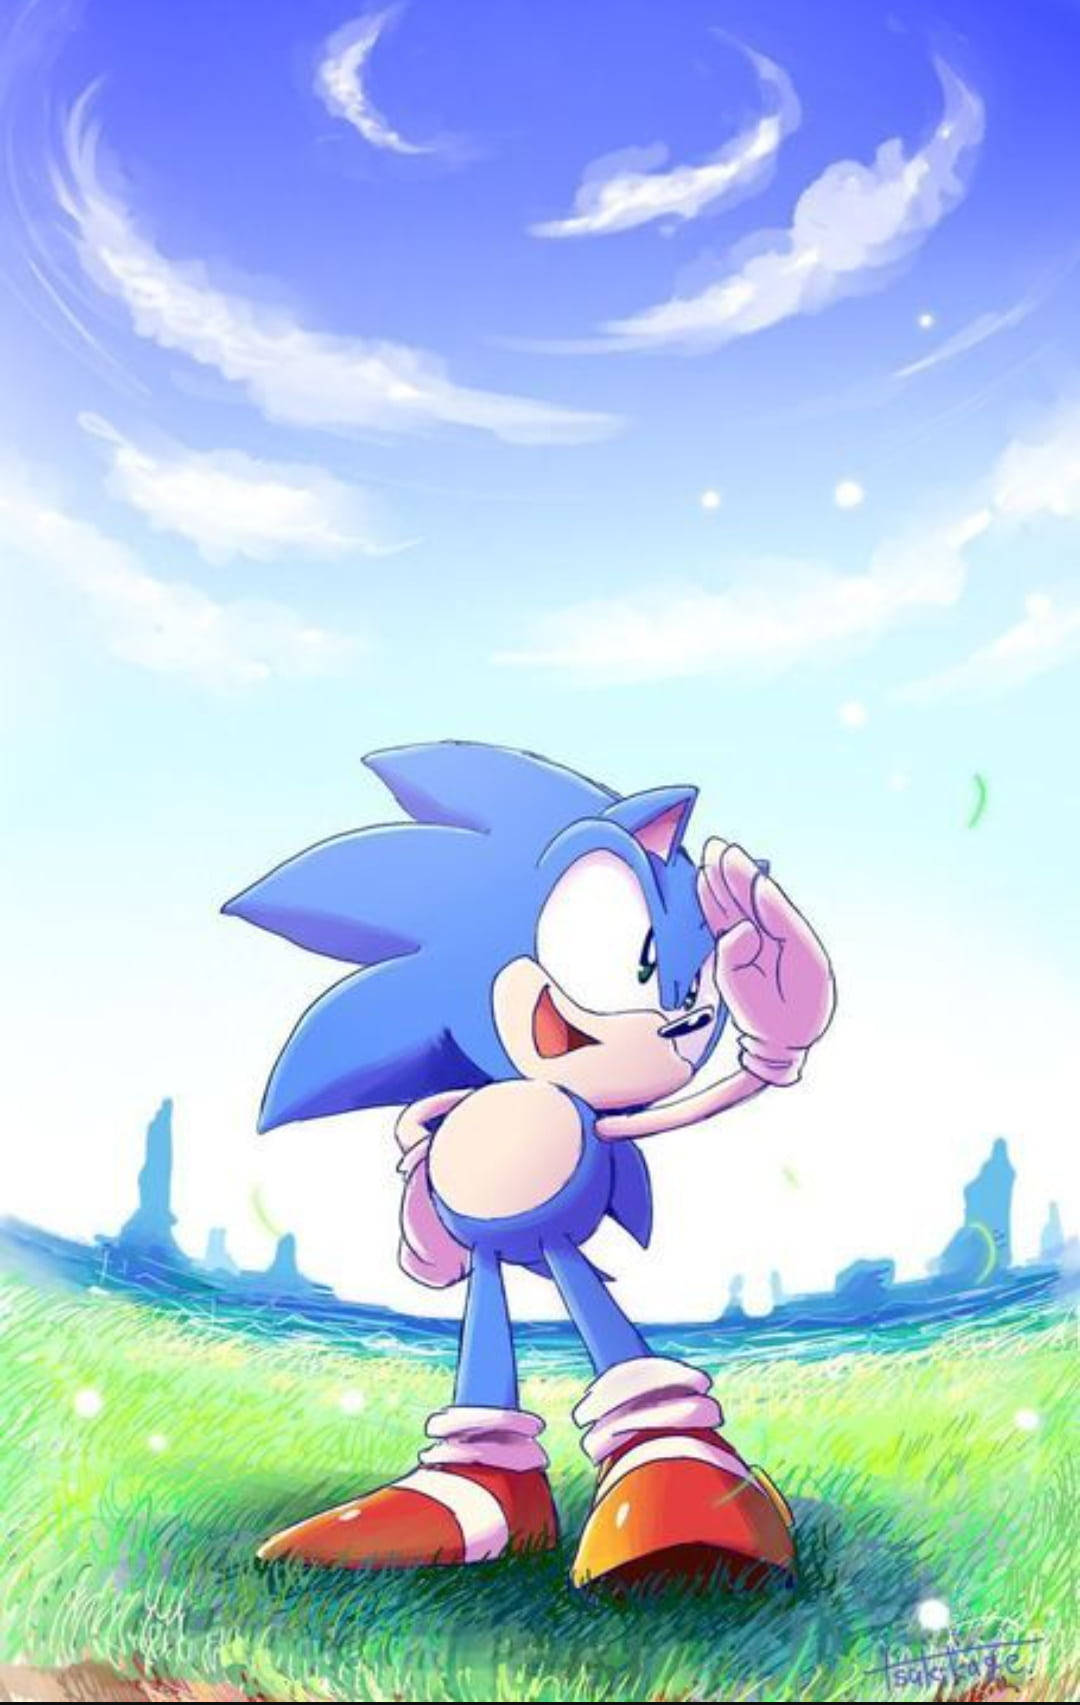 Sonic The Hedgehog in Joyful Acceleration Wallpaper